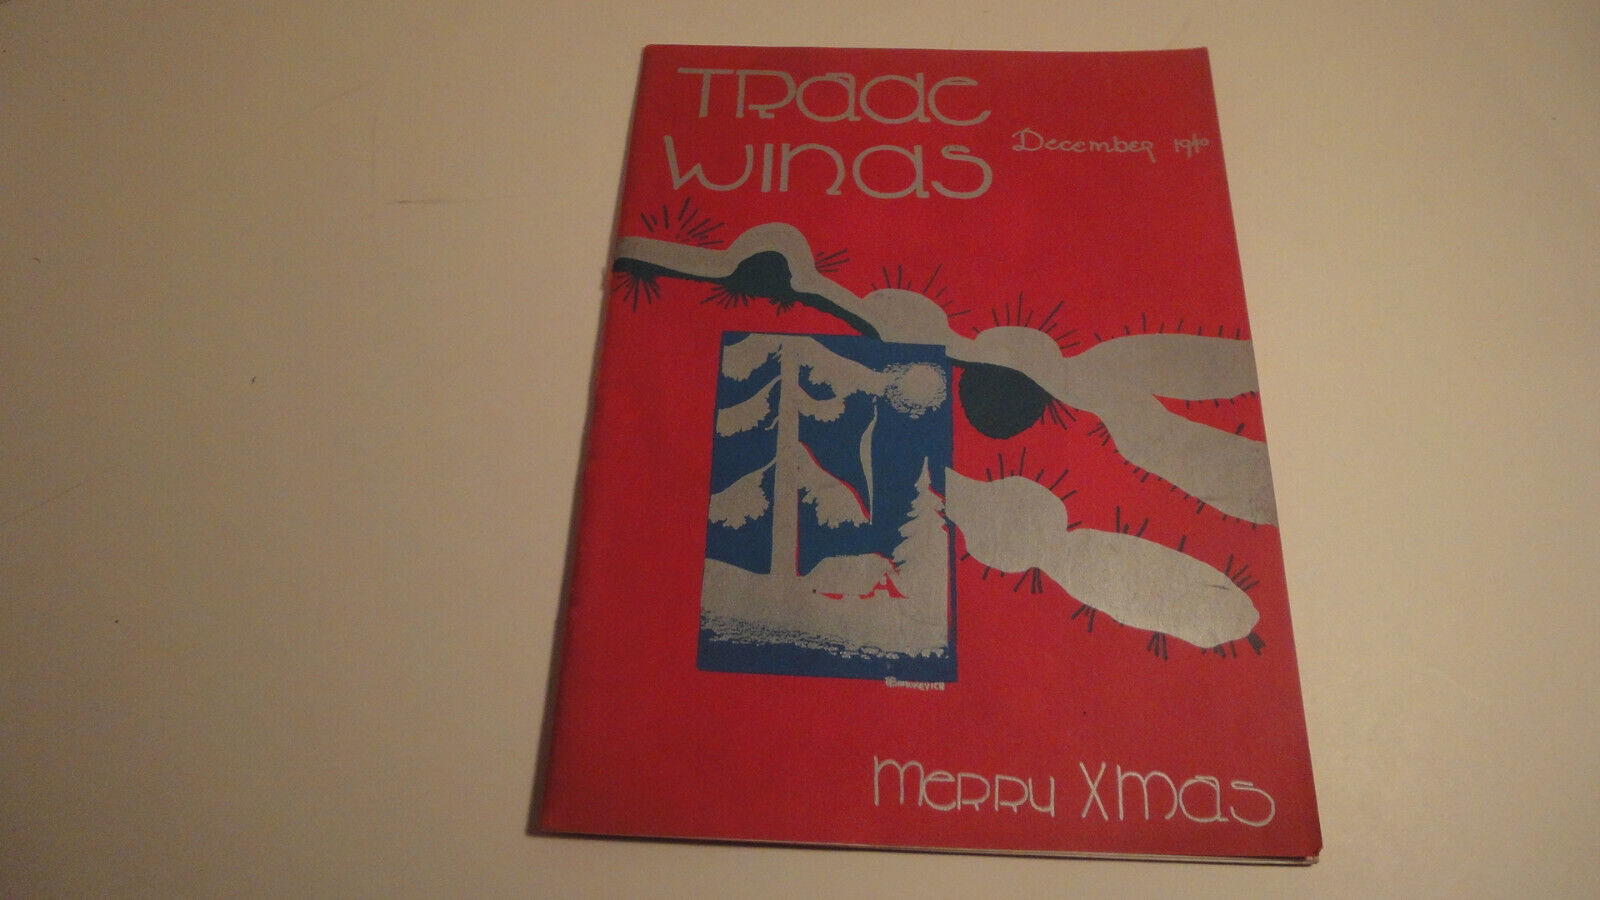 Trade High School Worcester MA.  1940 - TRADE WINDS School Paper-Advertisements